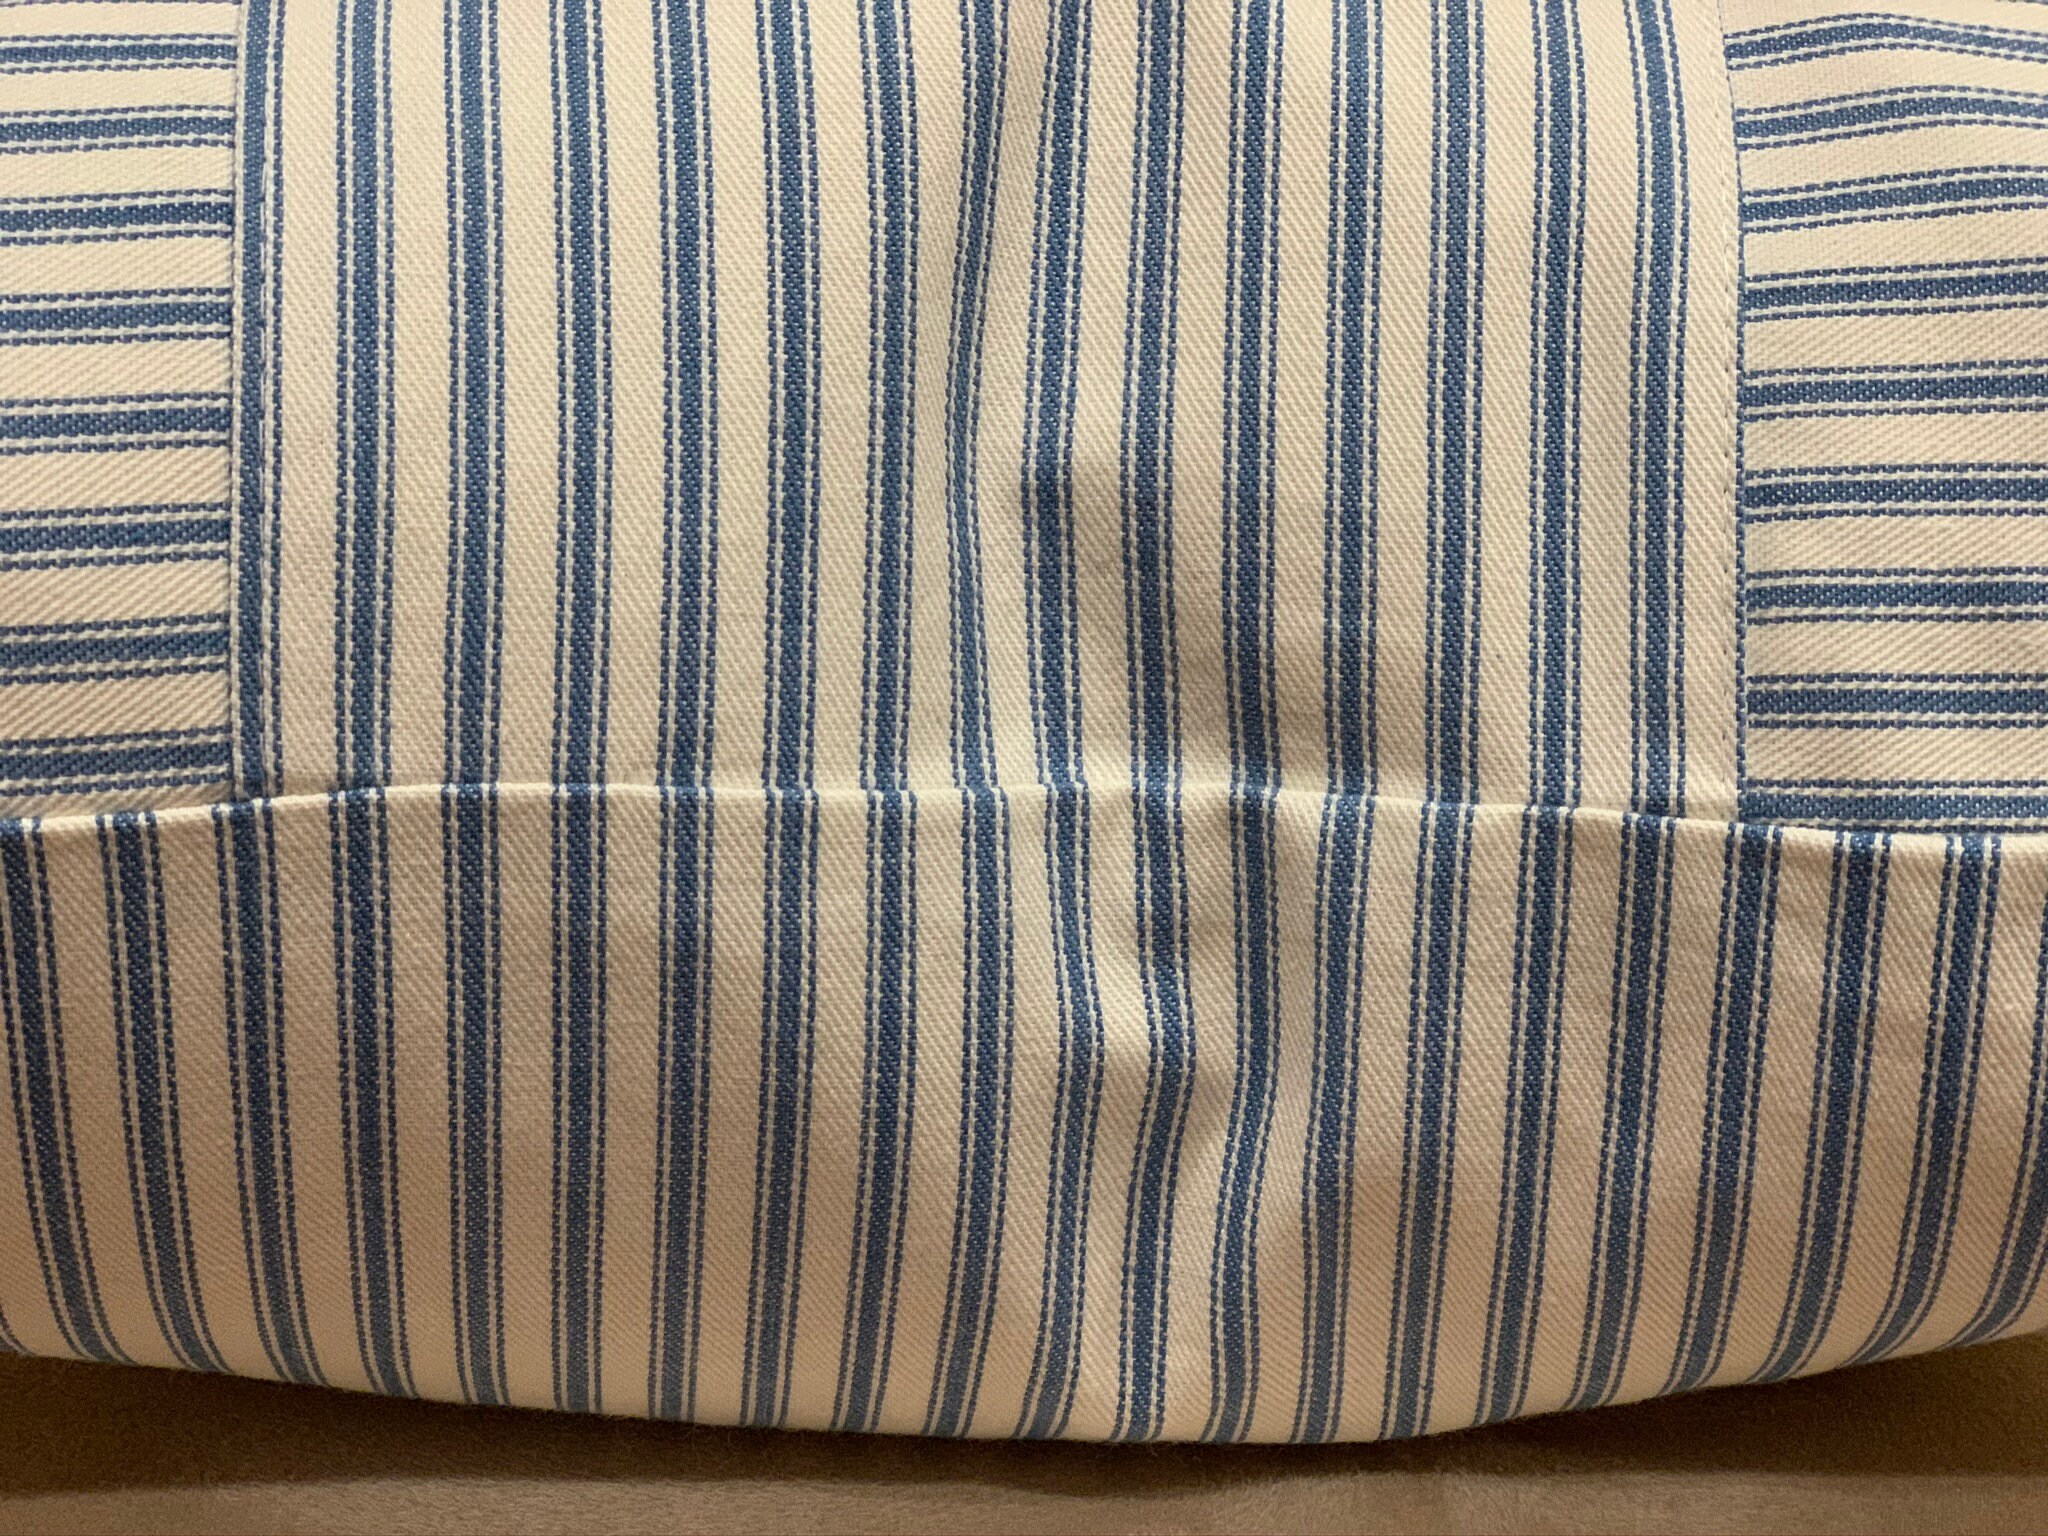 Blue Ticking Stripe pillow covers modern farmhouse style | Etsy